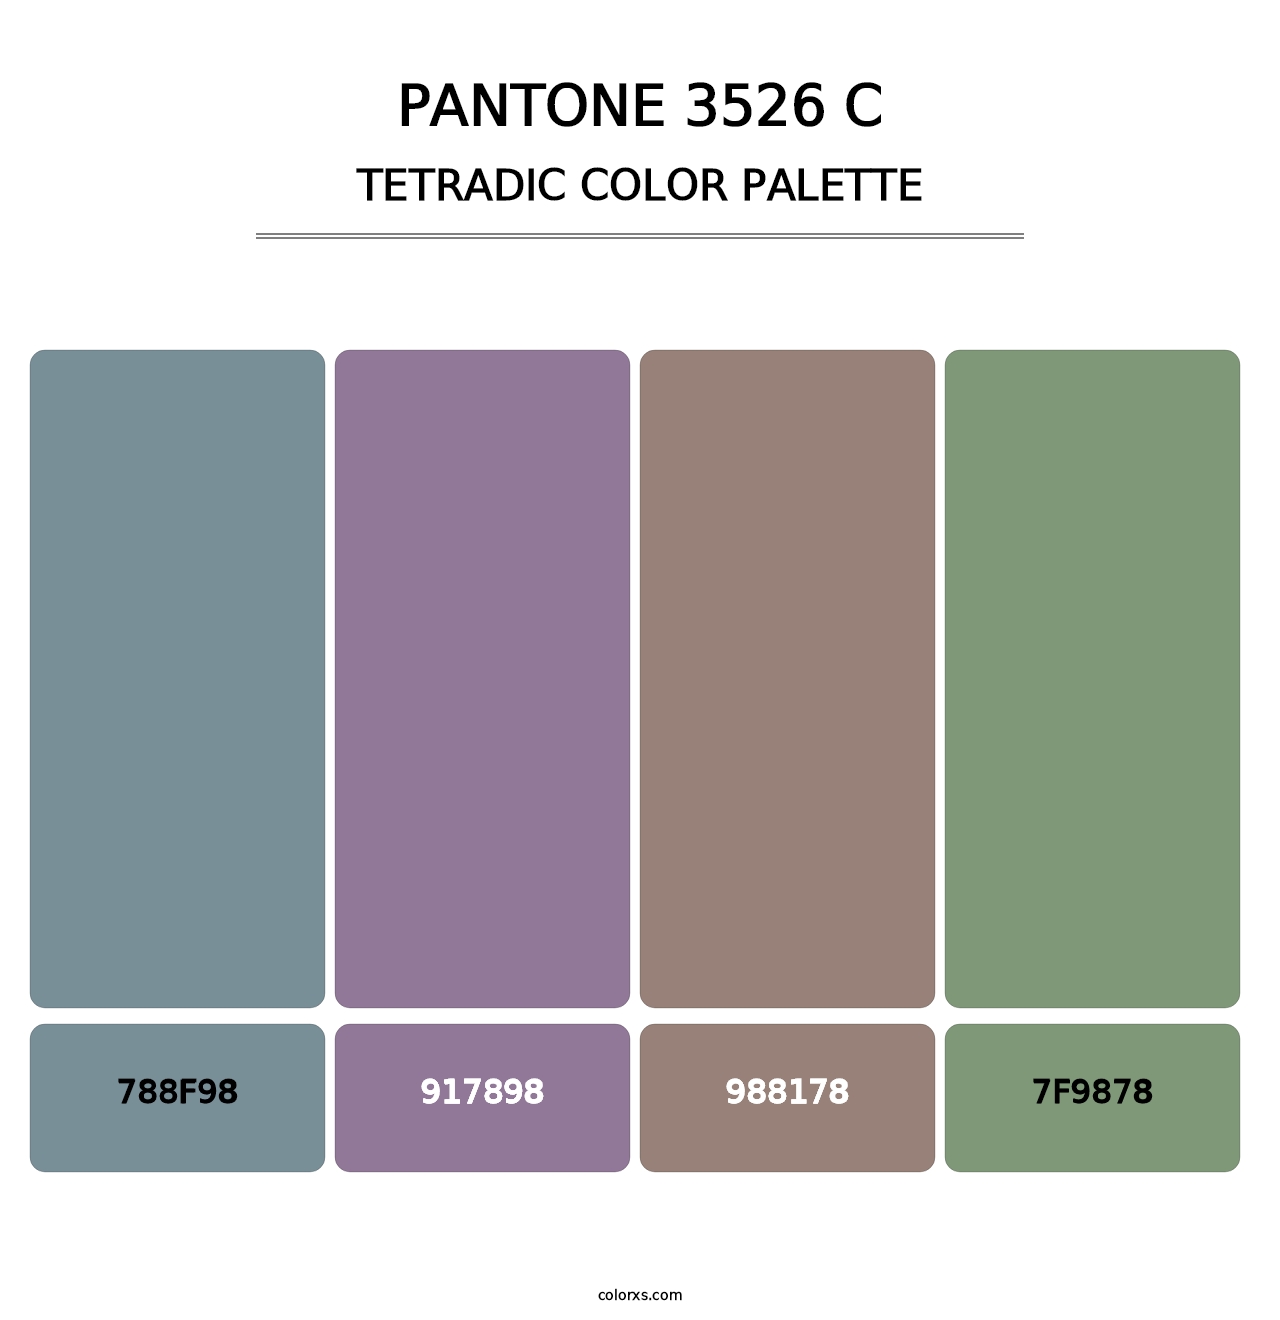 PANTONE 3526 C - Tetradic Color Palette